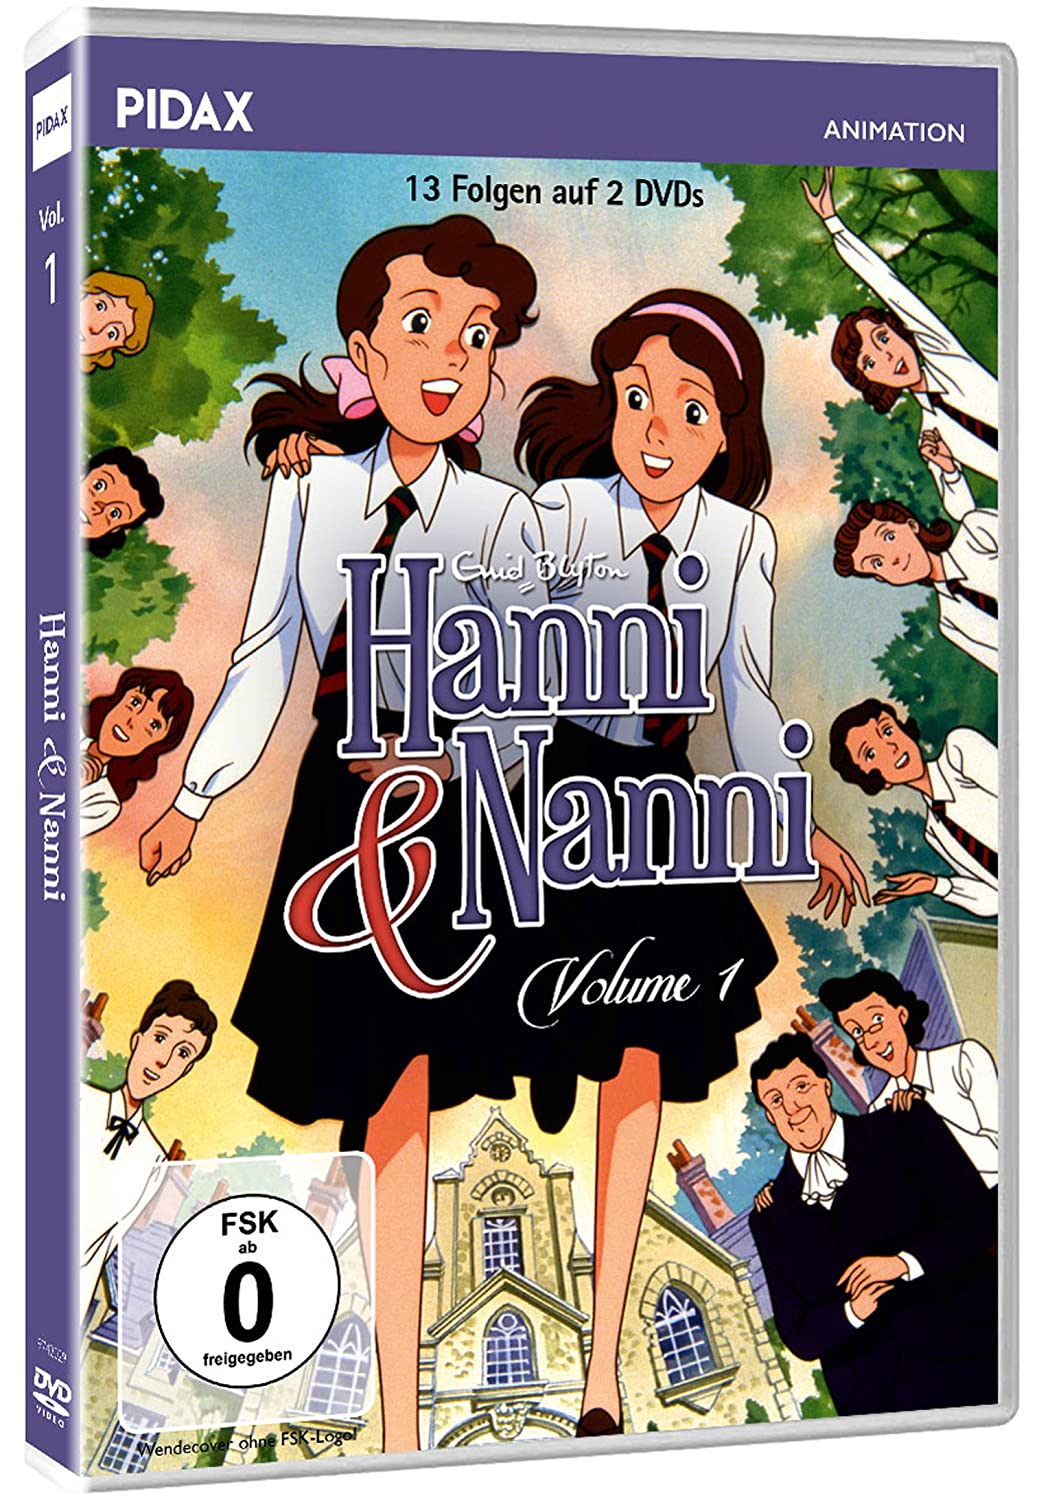 Hanni & Nanni, Vol. 1 + 2 - Enid Blyton - 26 Folgen